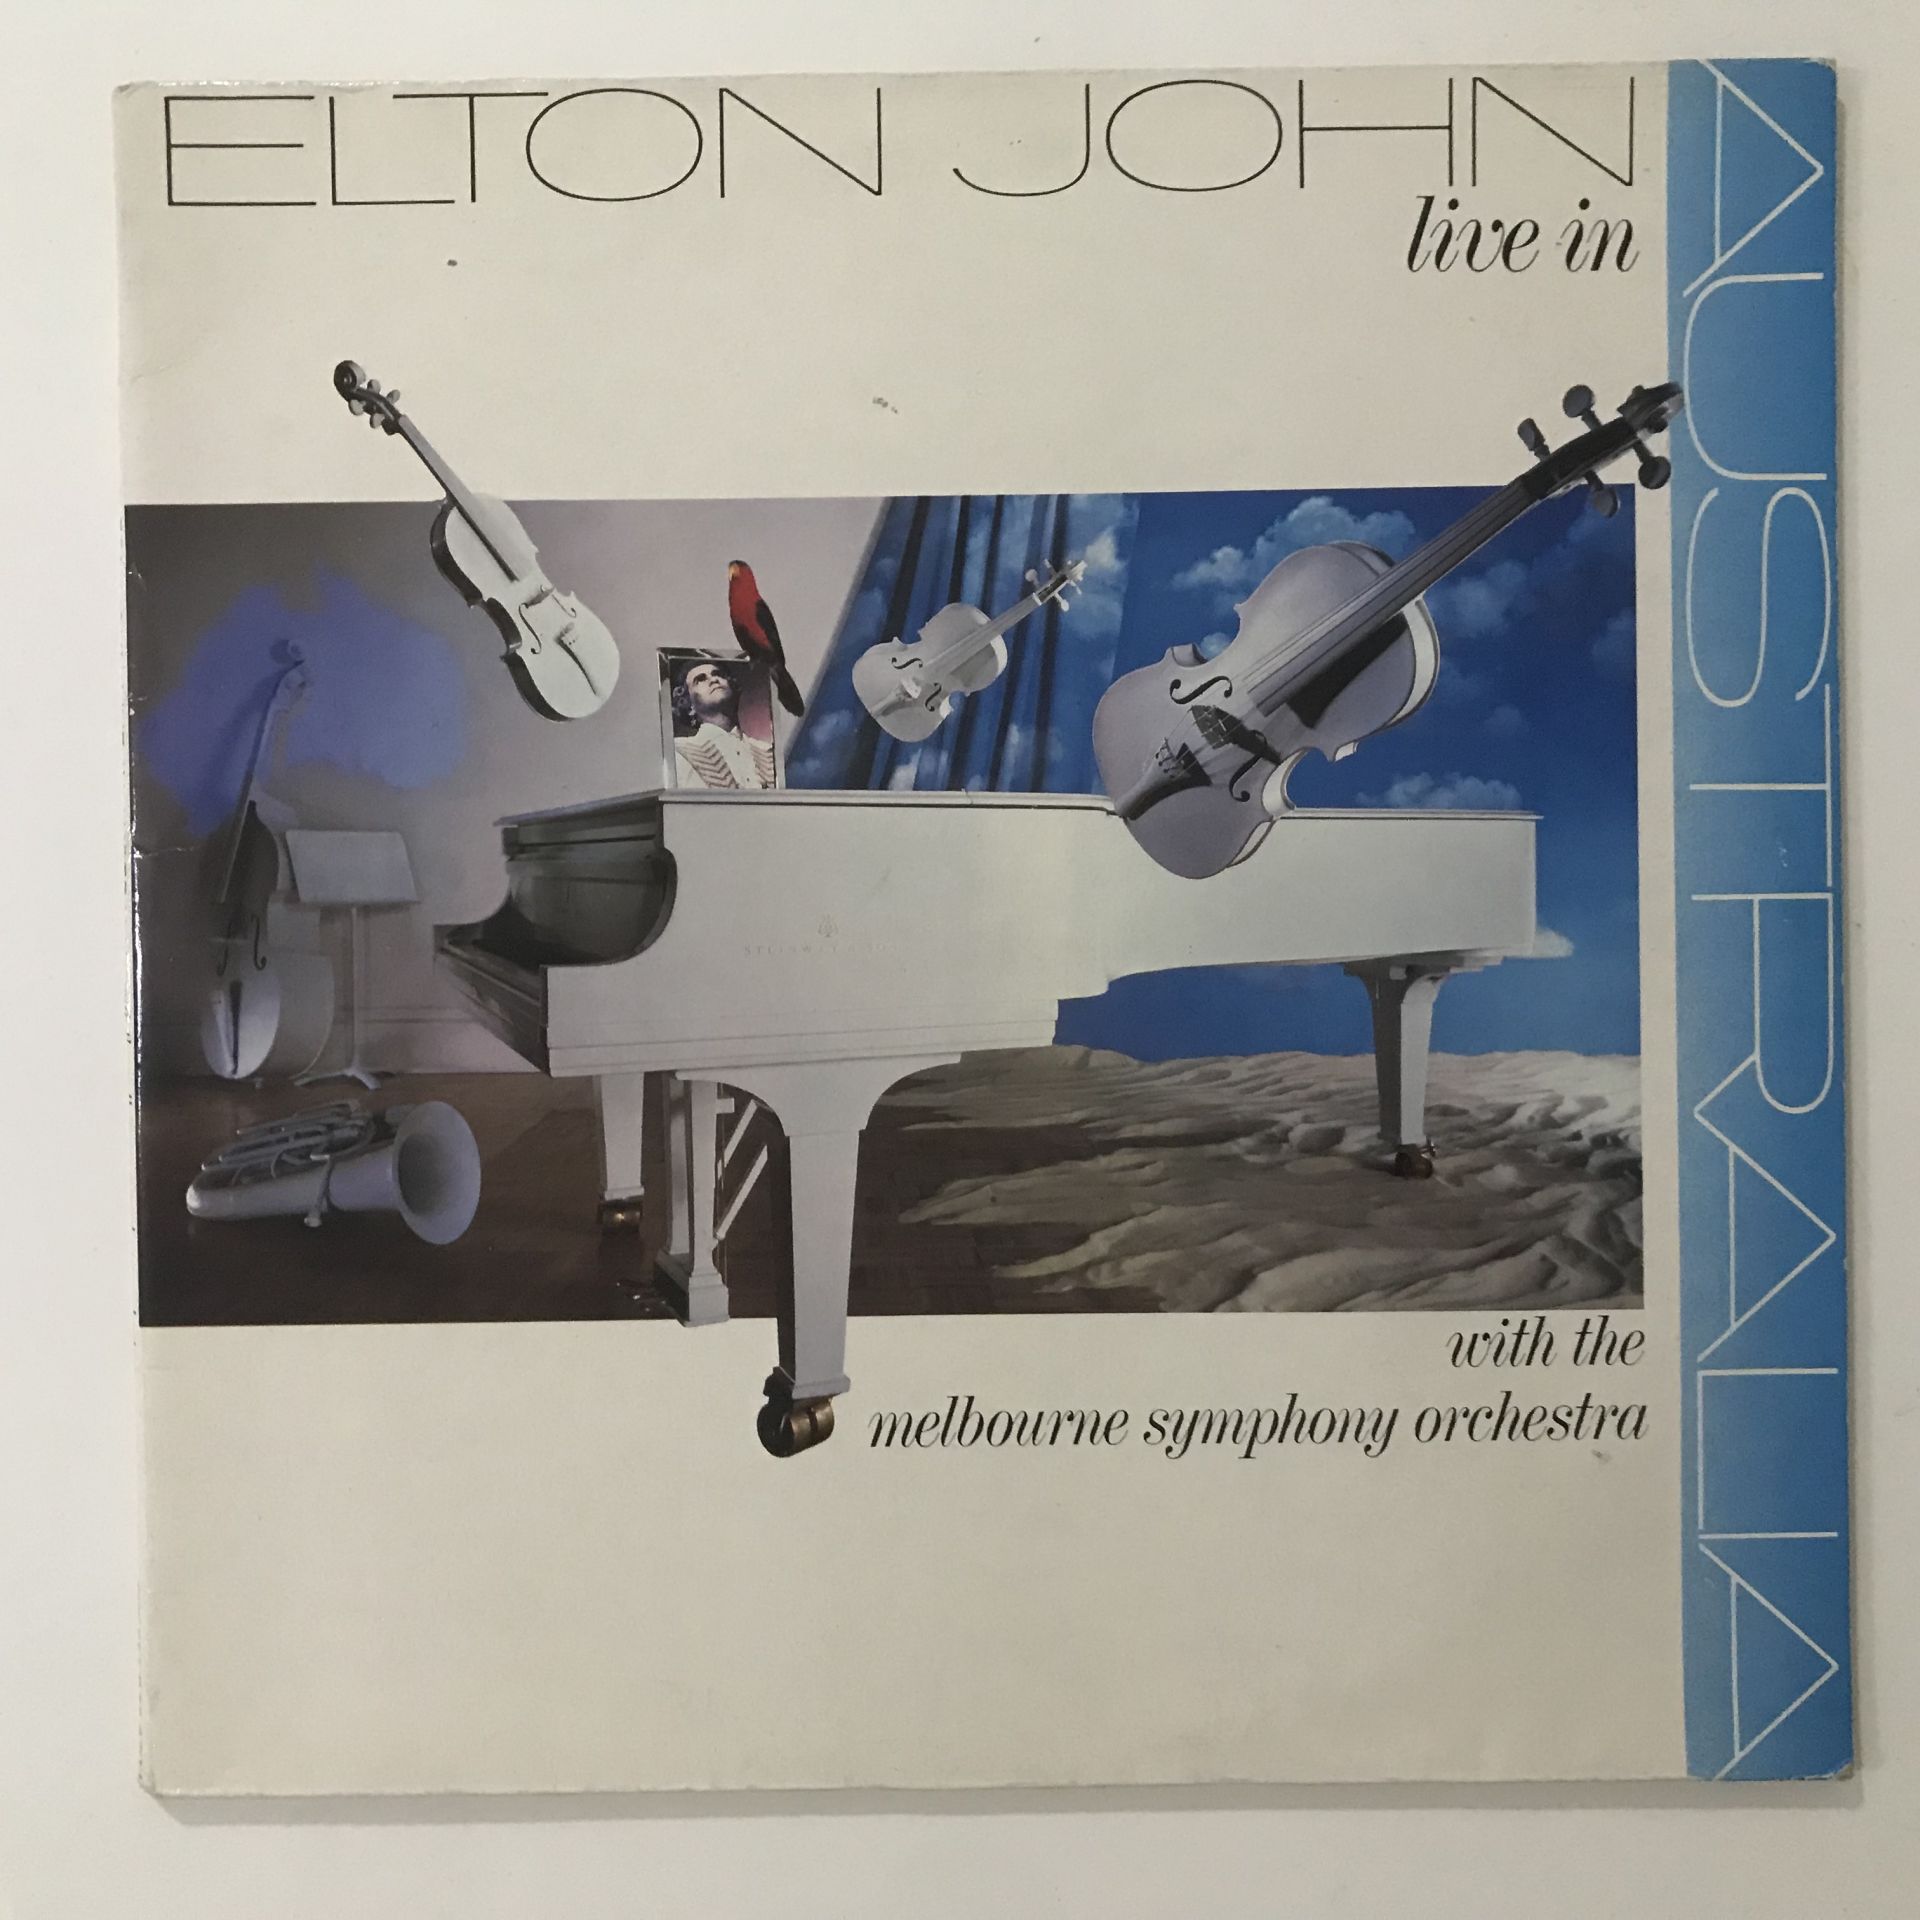 Elton John – Live In Australia (With The Melbourne Symphony Orchestra) 2 LP